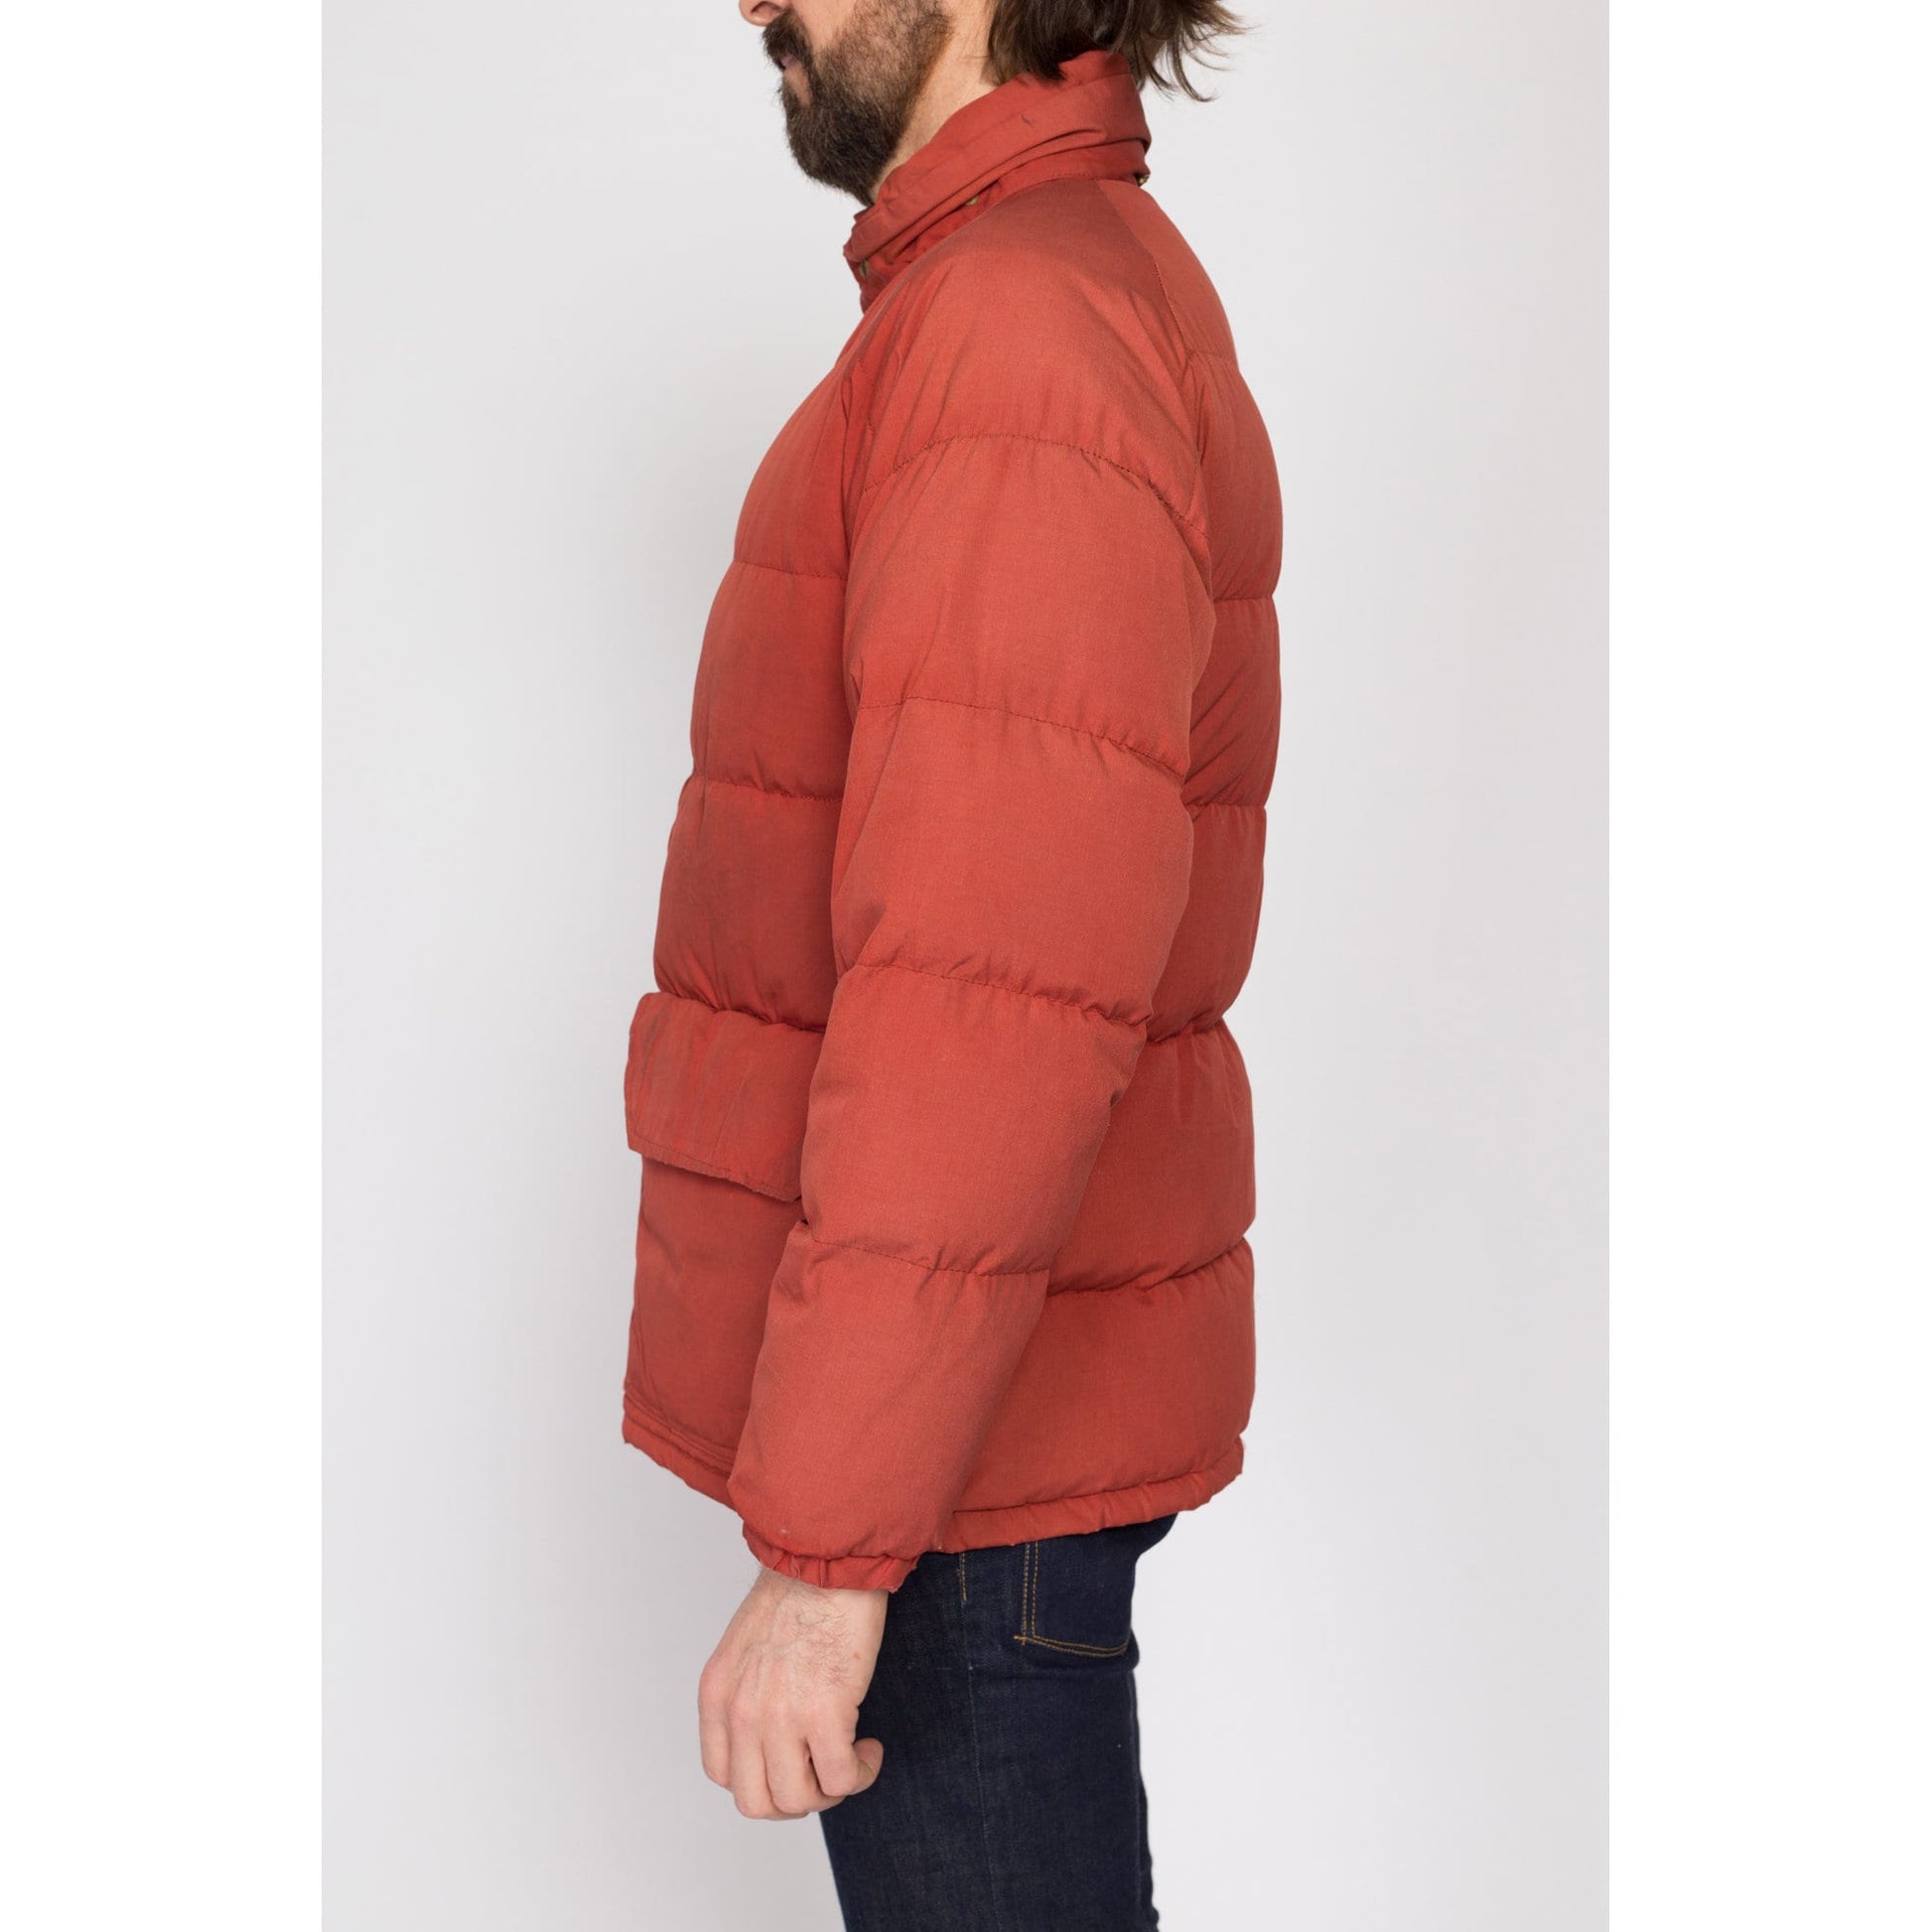 Medium 70s Rust Red Down Fill Puffer Winter Coat | Vintage Men's Zip Up Warm Puffy Ski Jacket